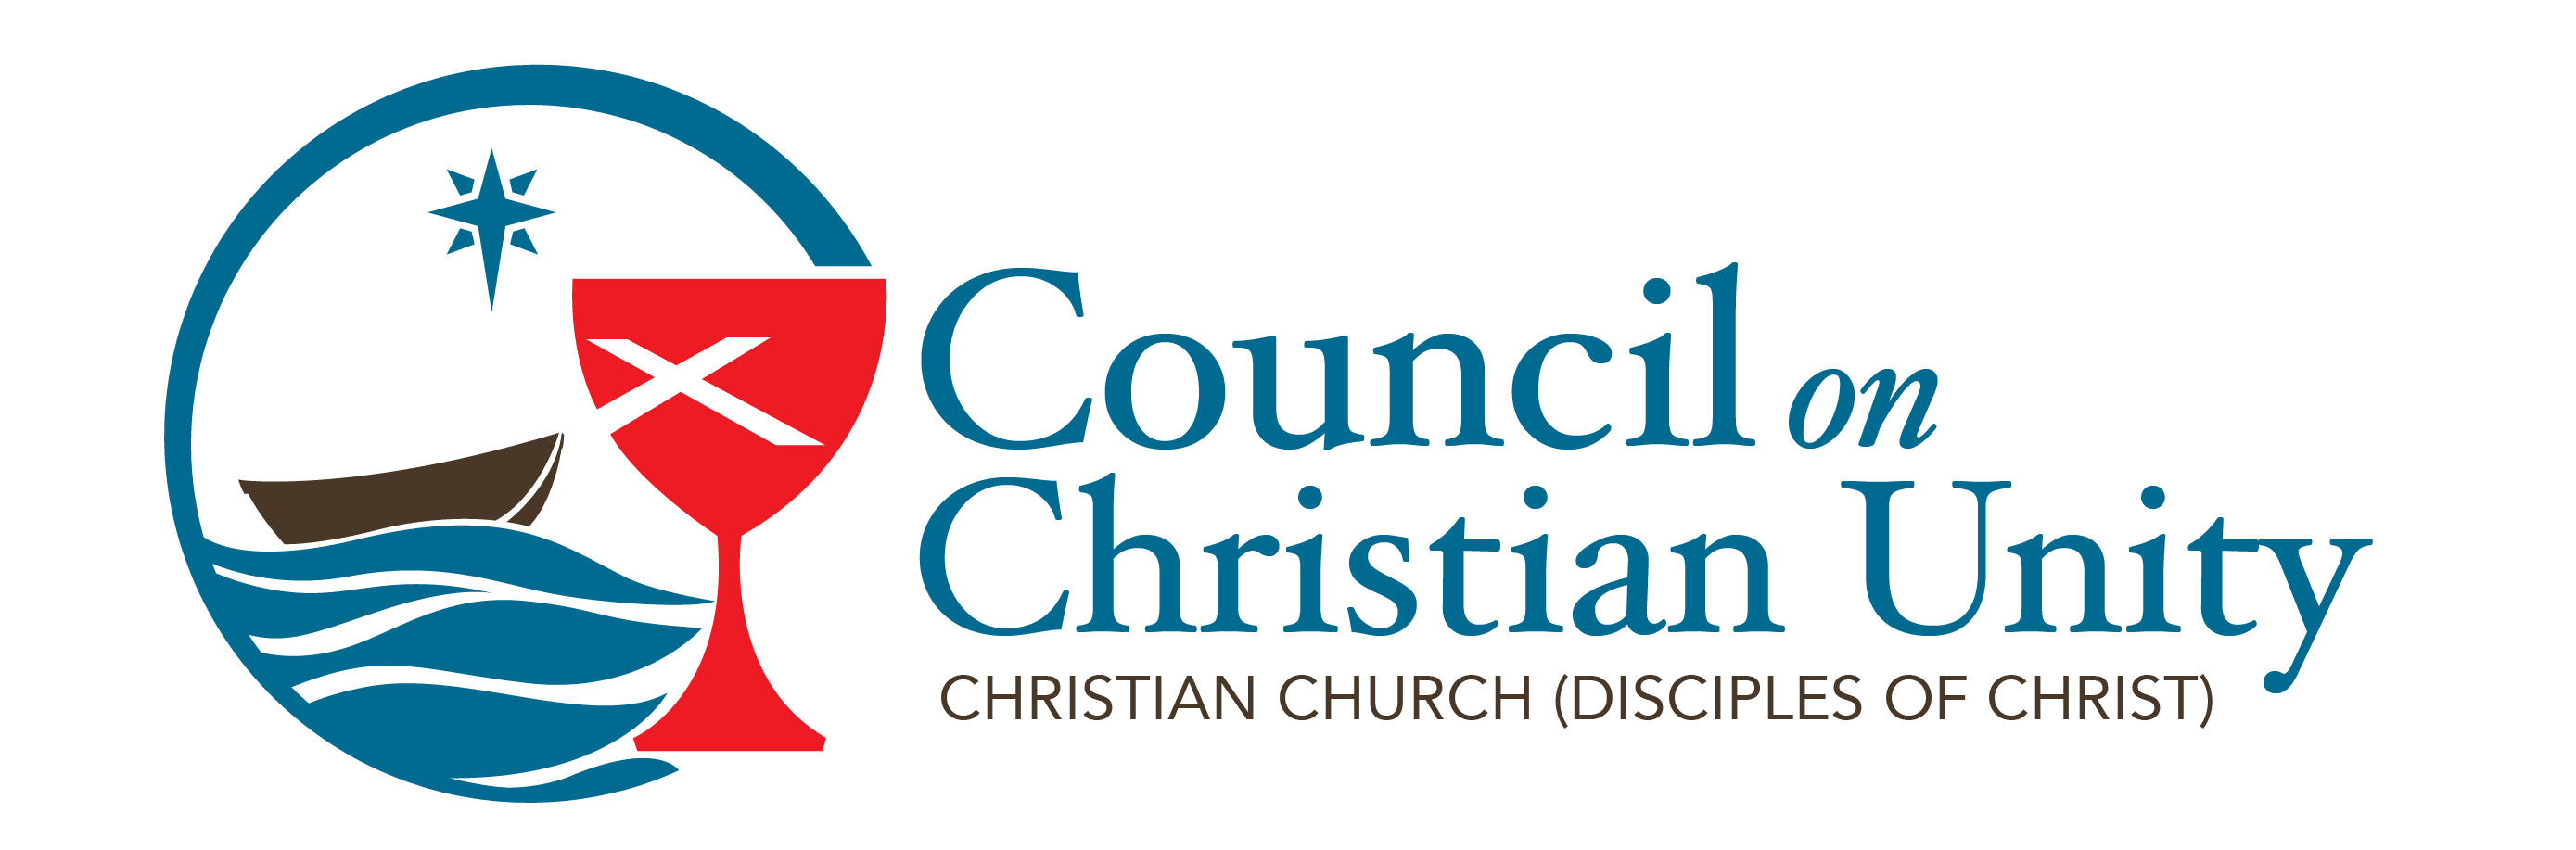 Christian Church Disciples of Christ Logo - Graphics and Photos - Christian Church (Disciples of Christ)